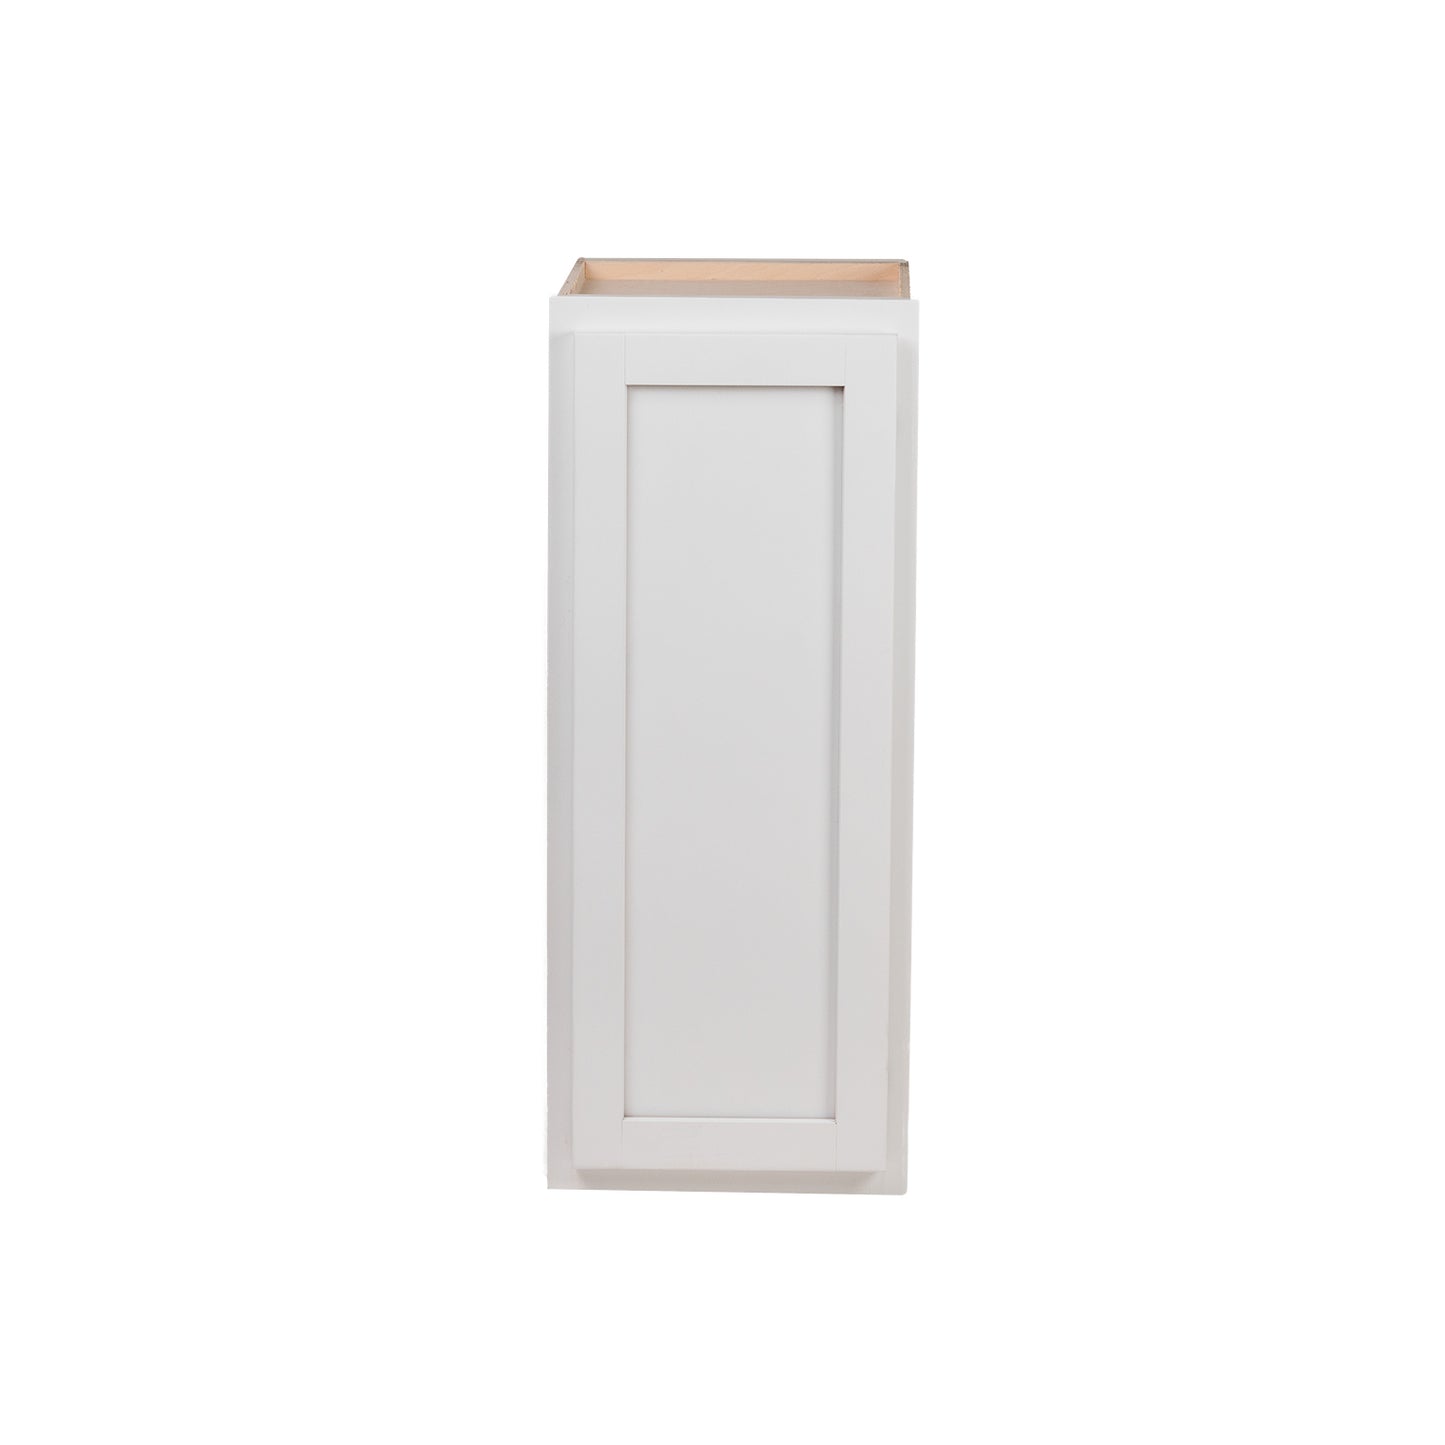 Quicklock RTA (Ready-to-Assemble) Pure White 18"Wx30"Hx12"D Wall Cabinet